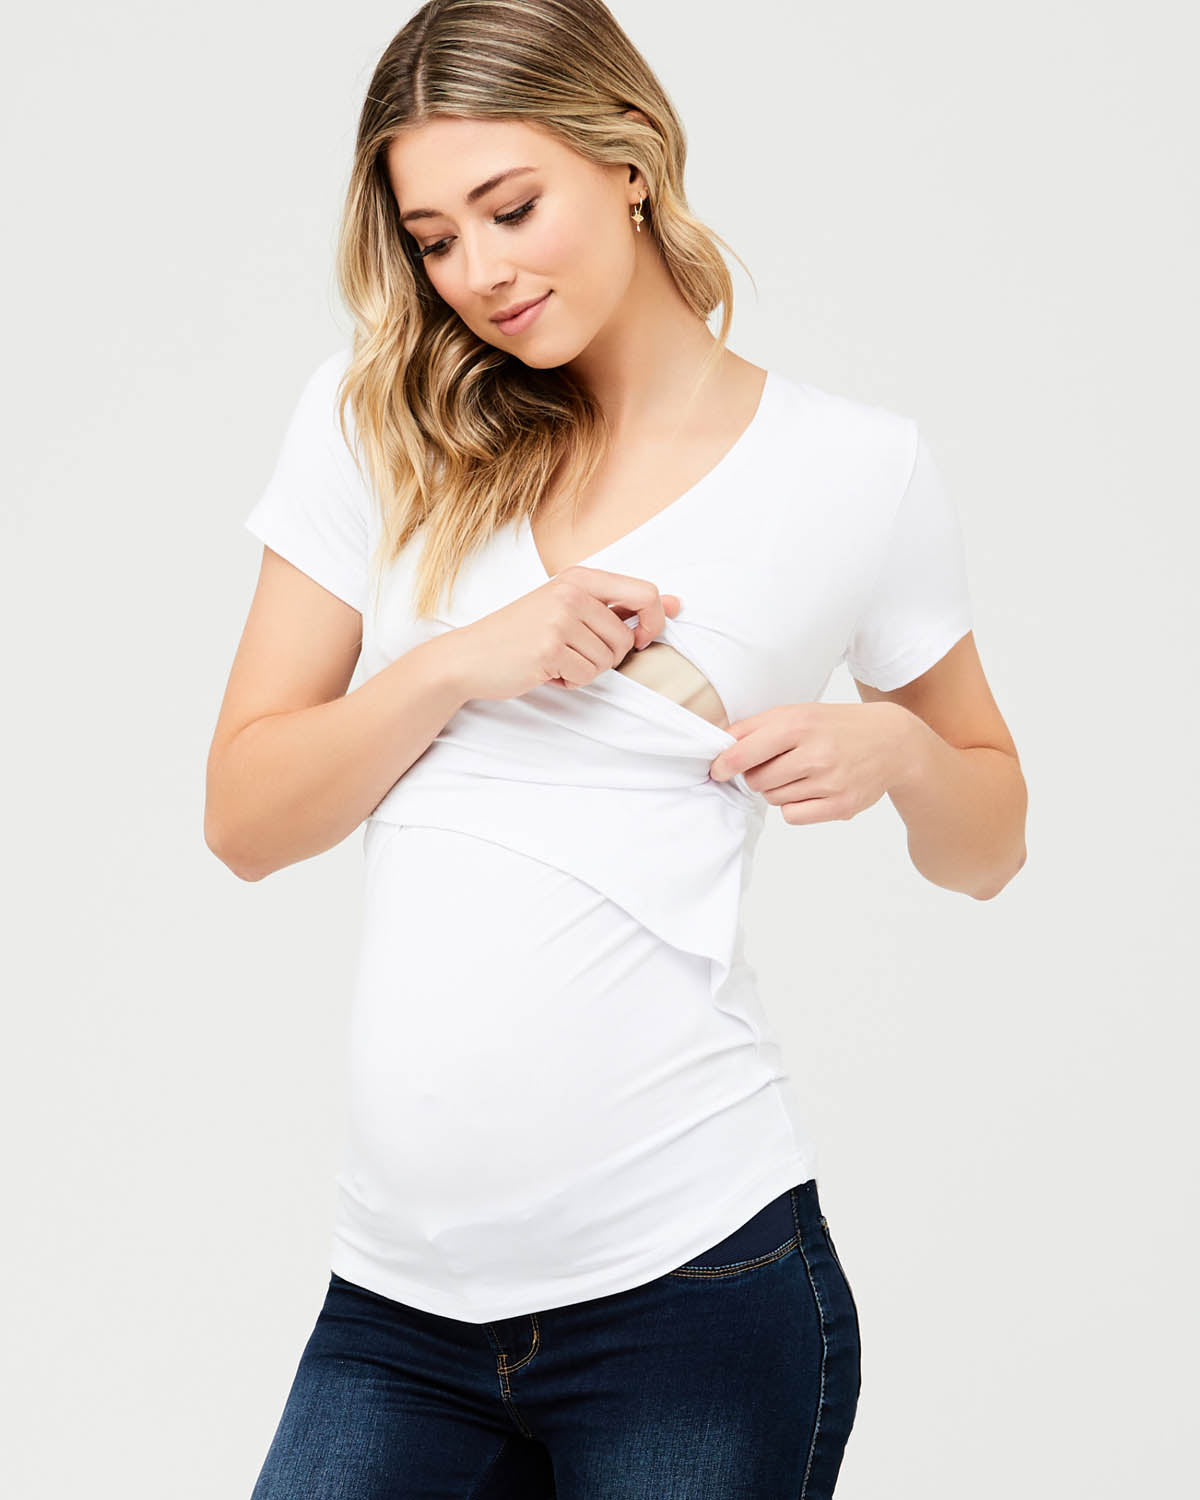 Ripe Maternity 'Embrace' Short Sleeve Nursing Tee - White